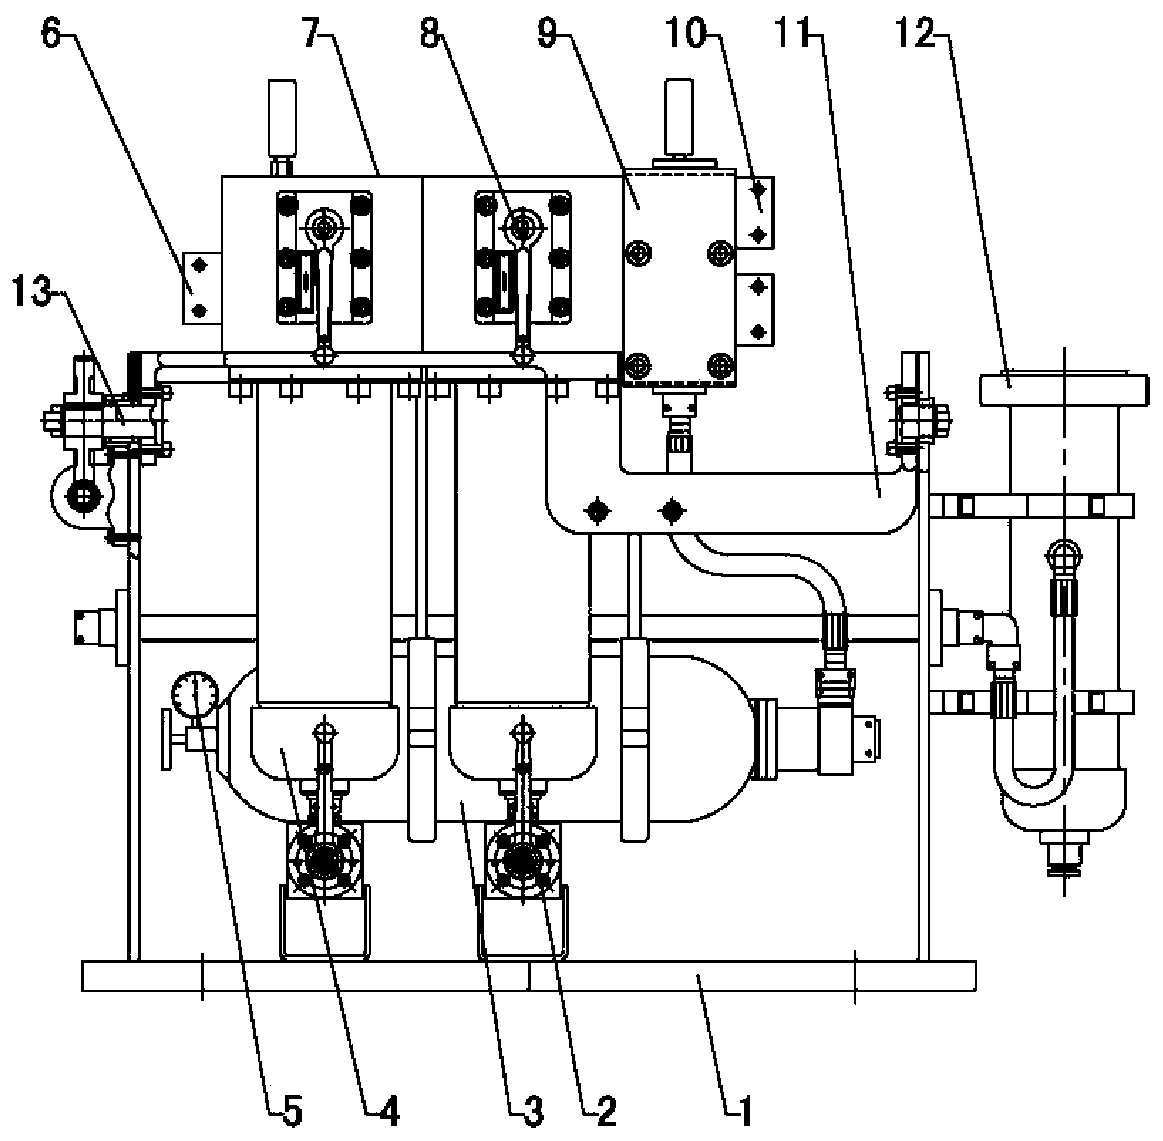 Integrated pump station liquid supply system